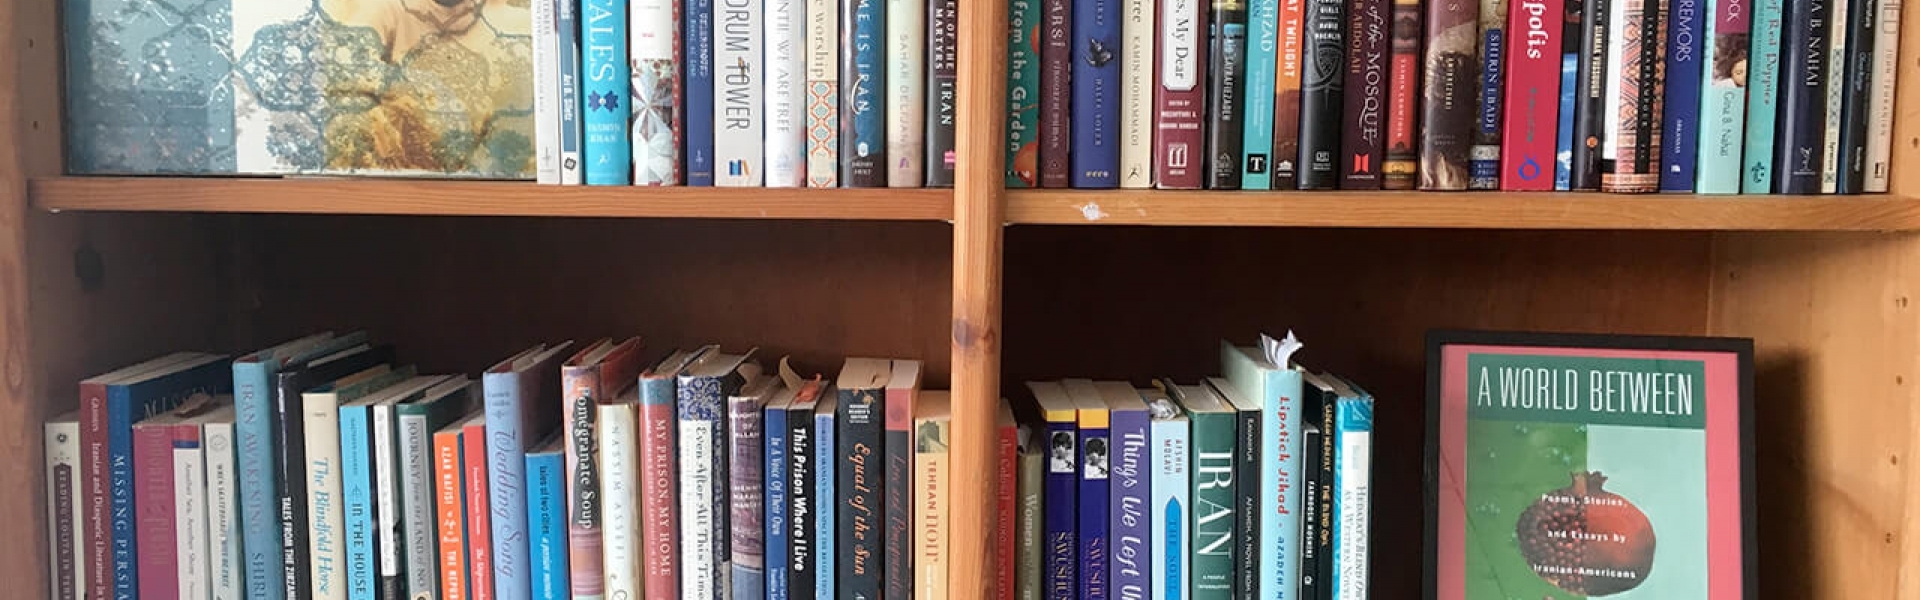 Bookshelf with books and artwork